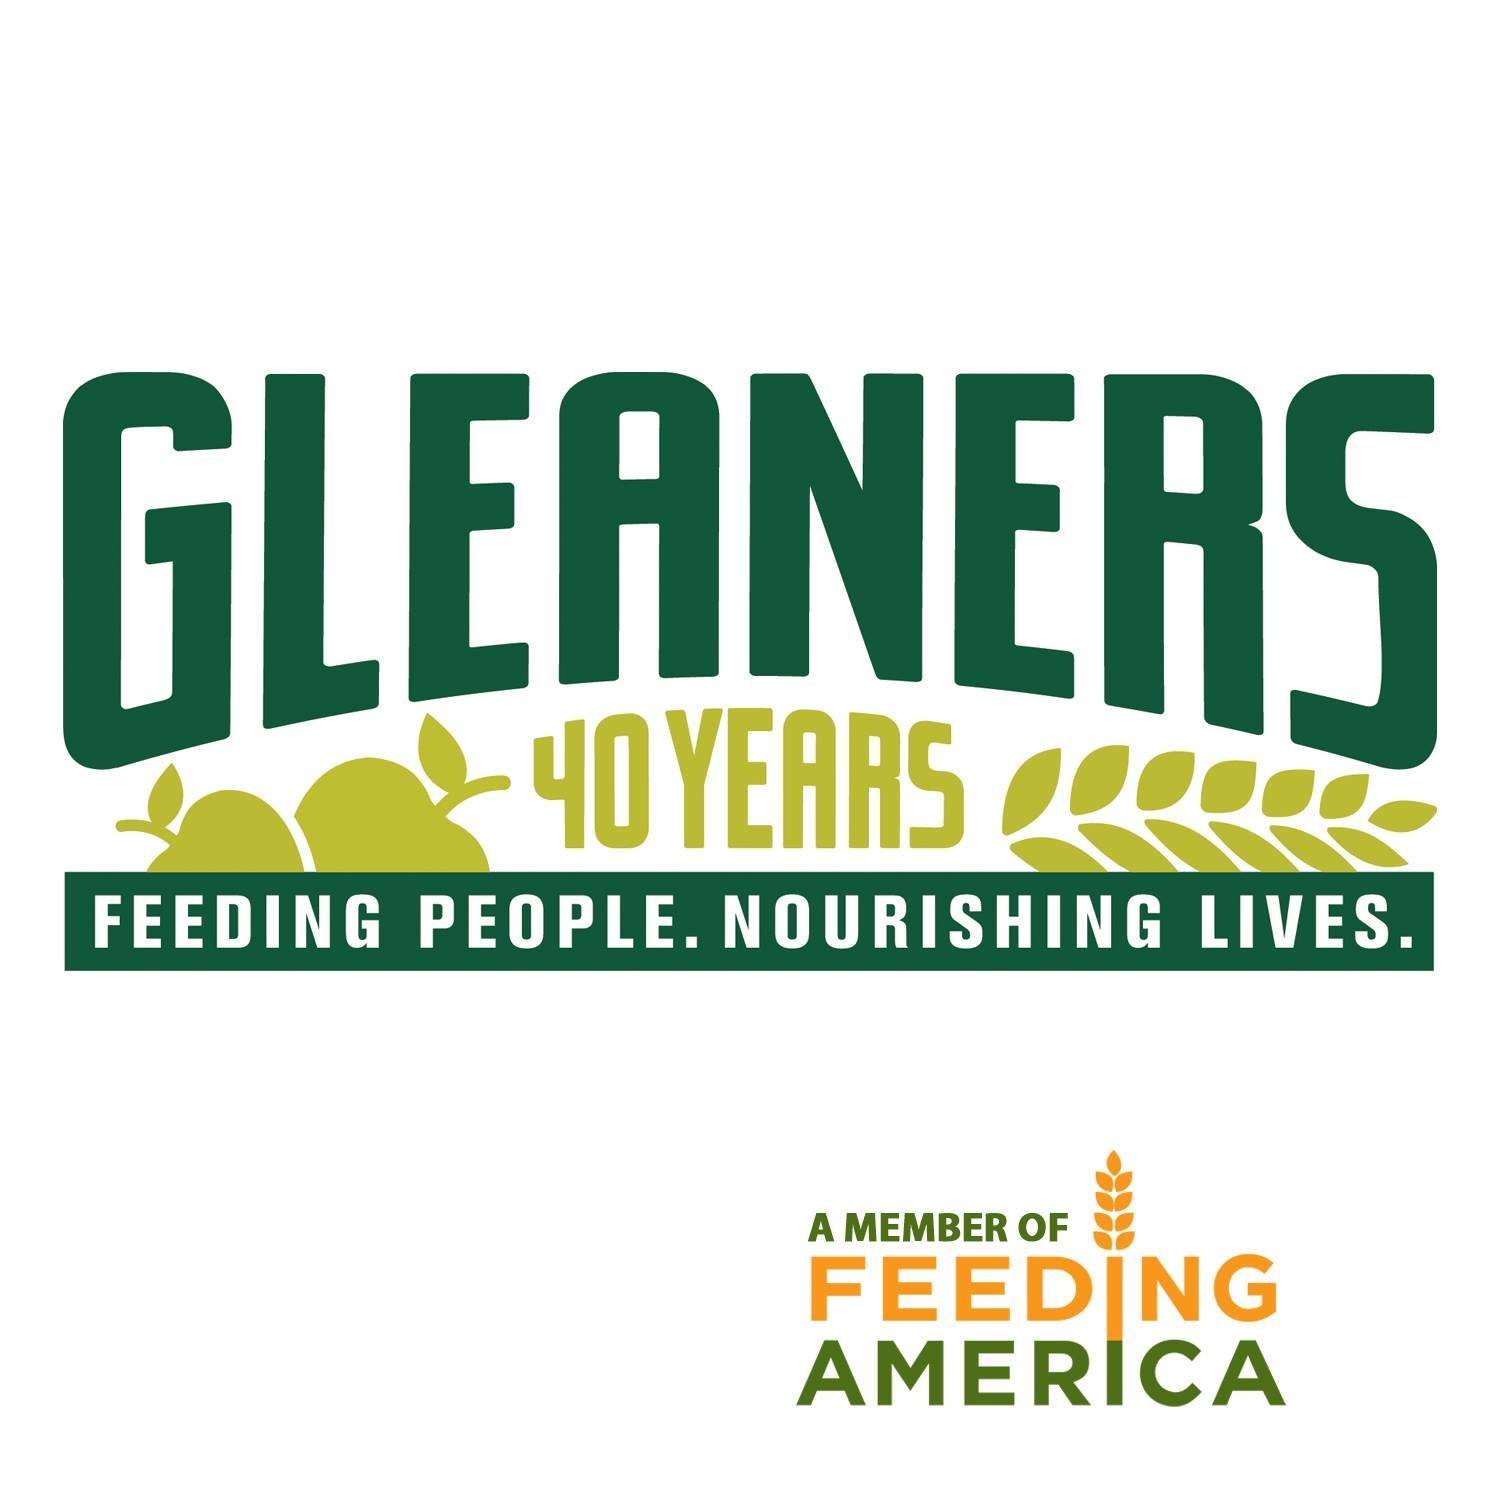 Gleaners Community Food Bank